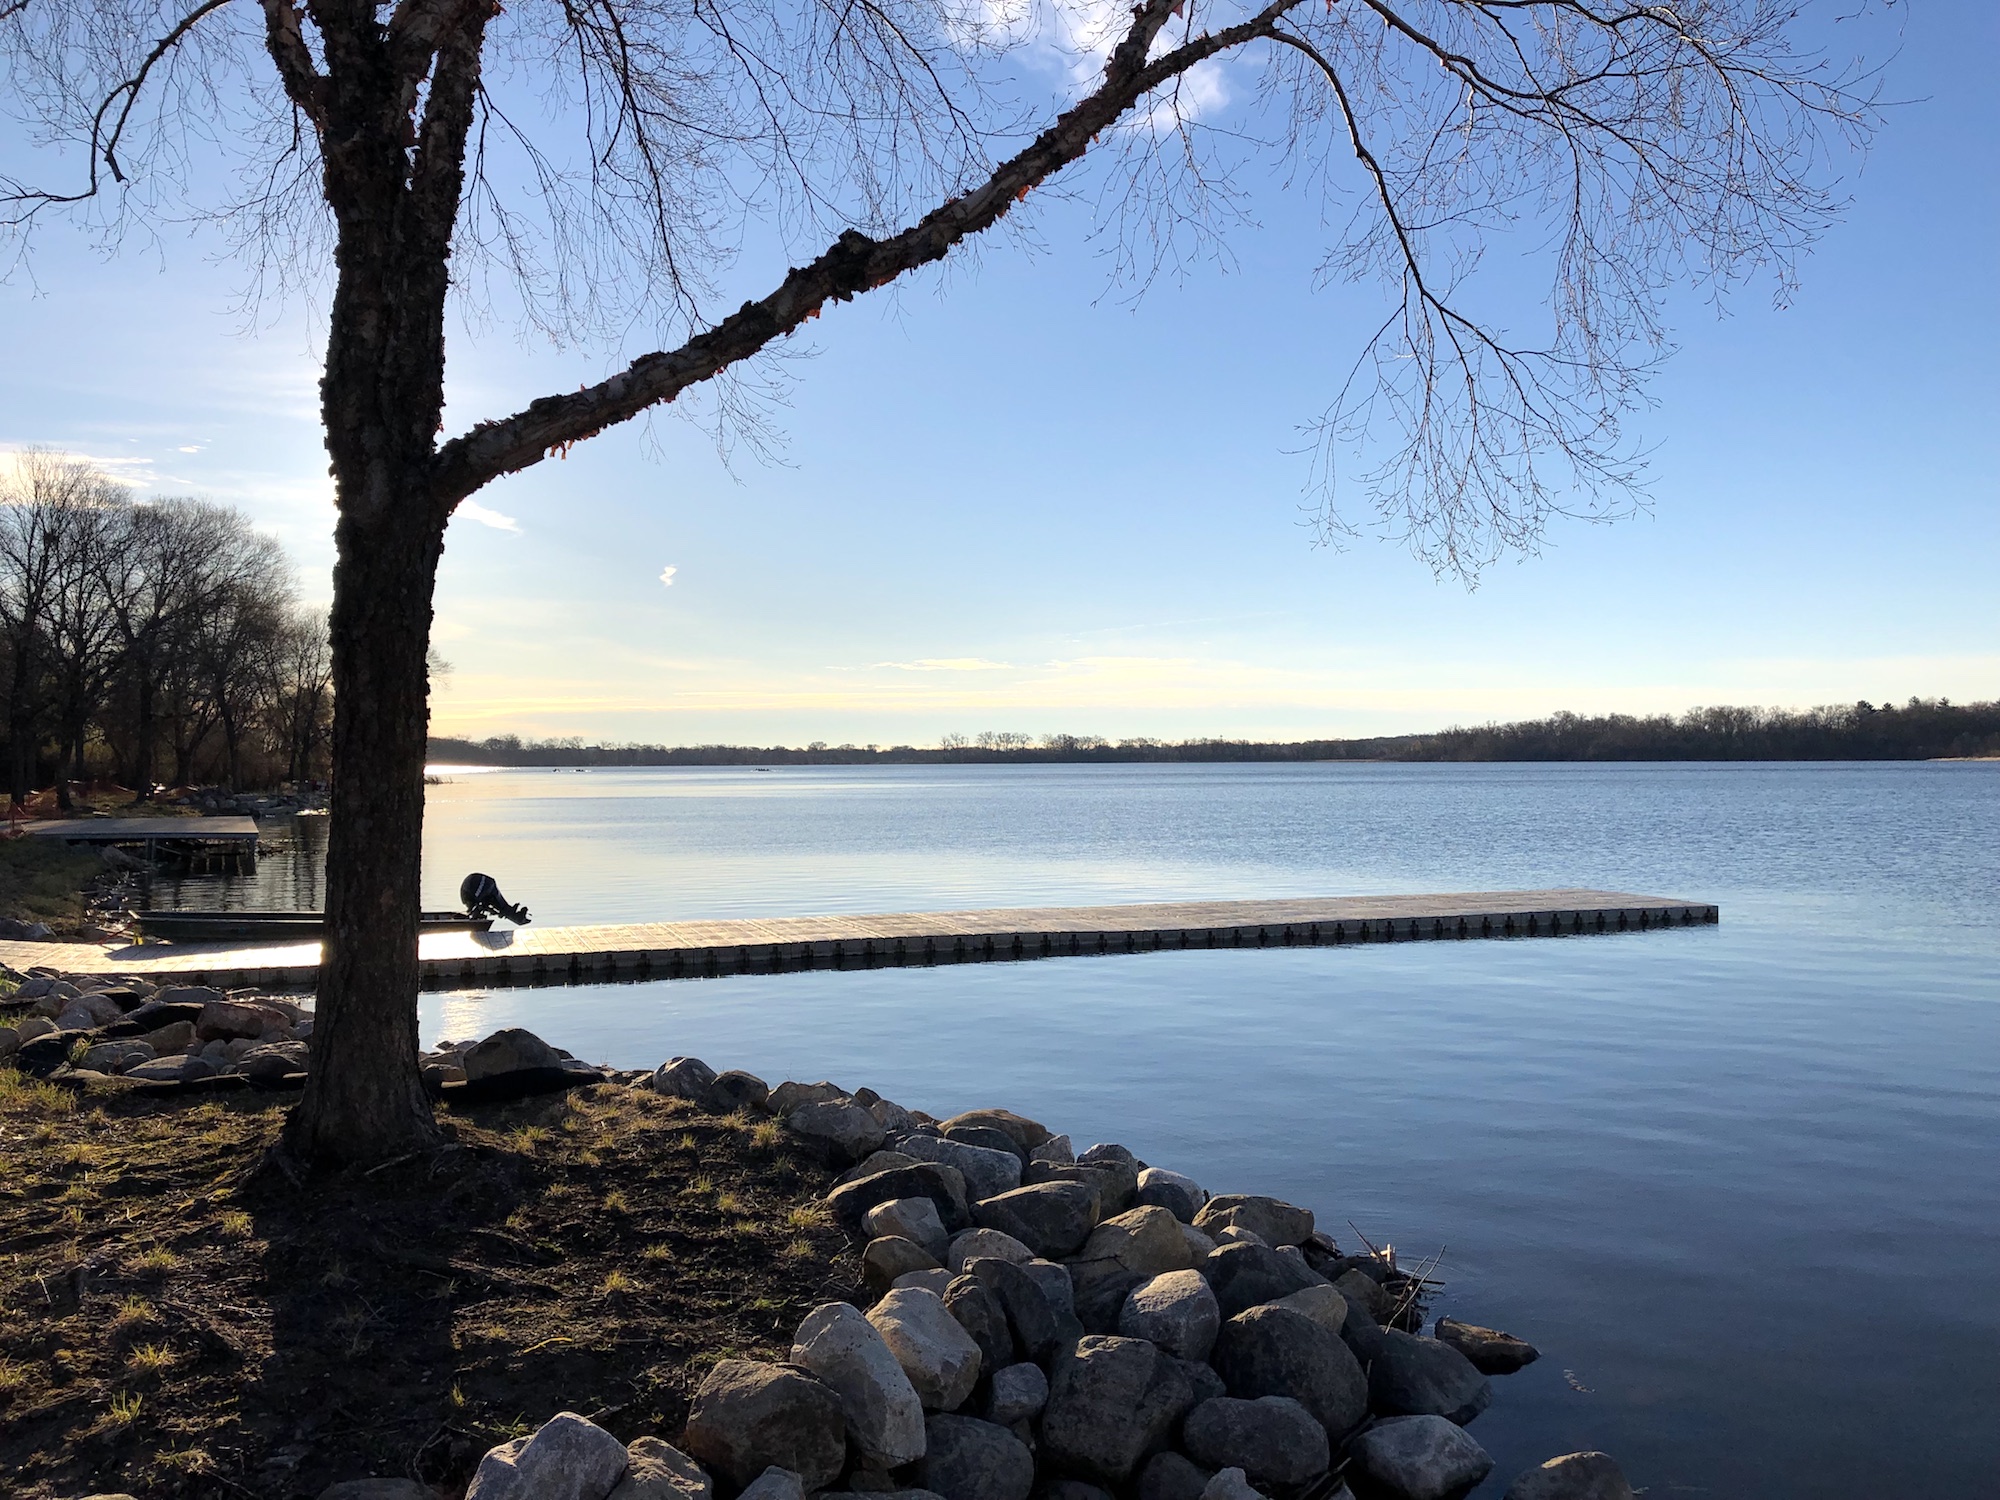 Lake Wingra on April 19, 2019.